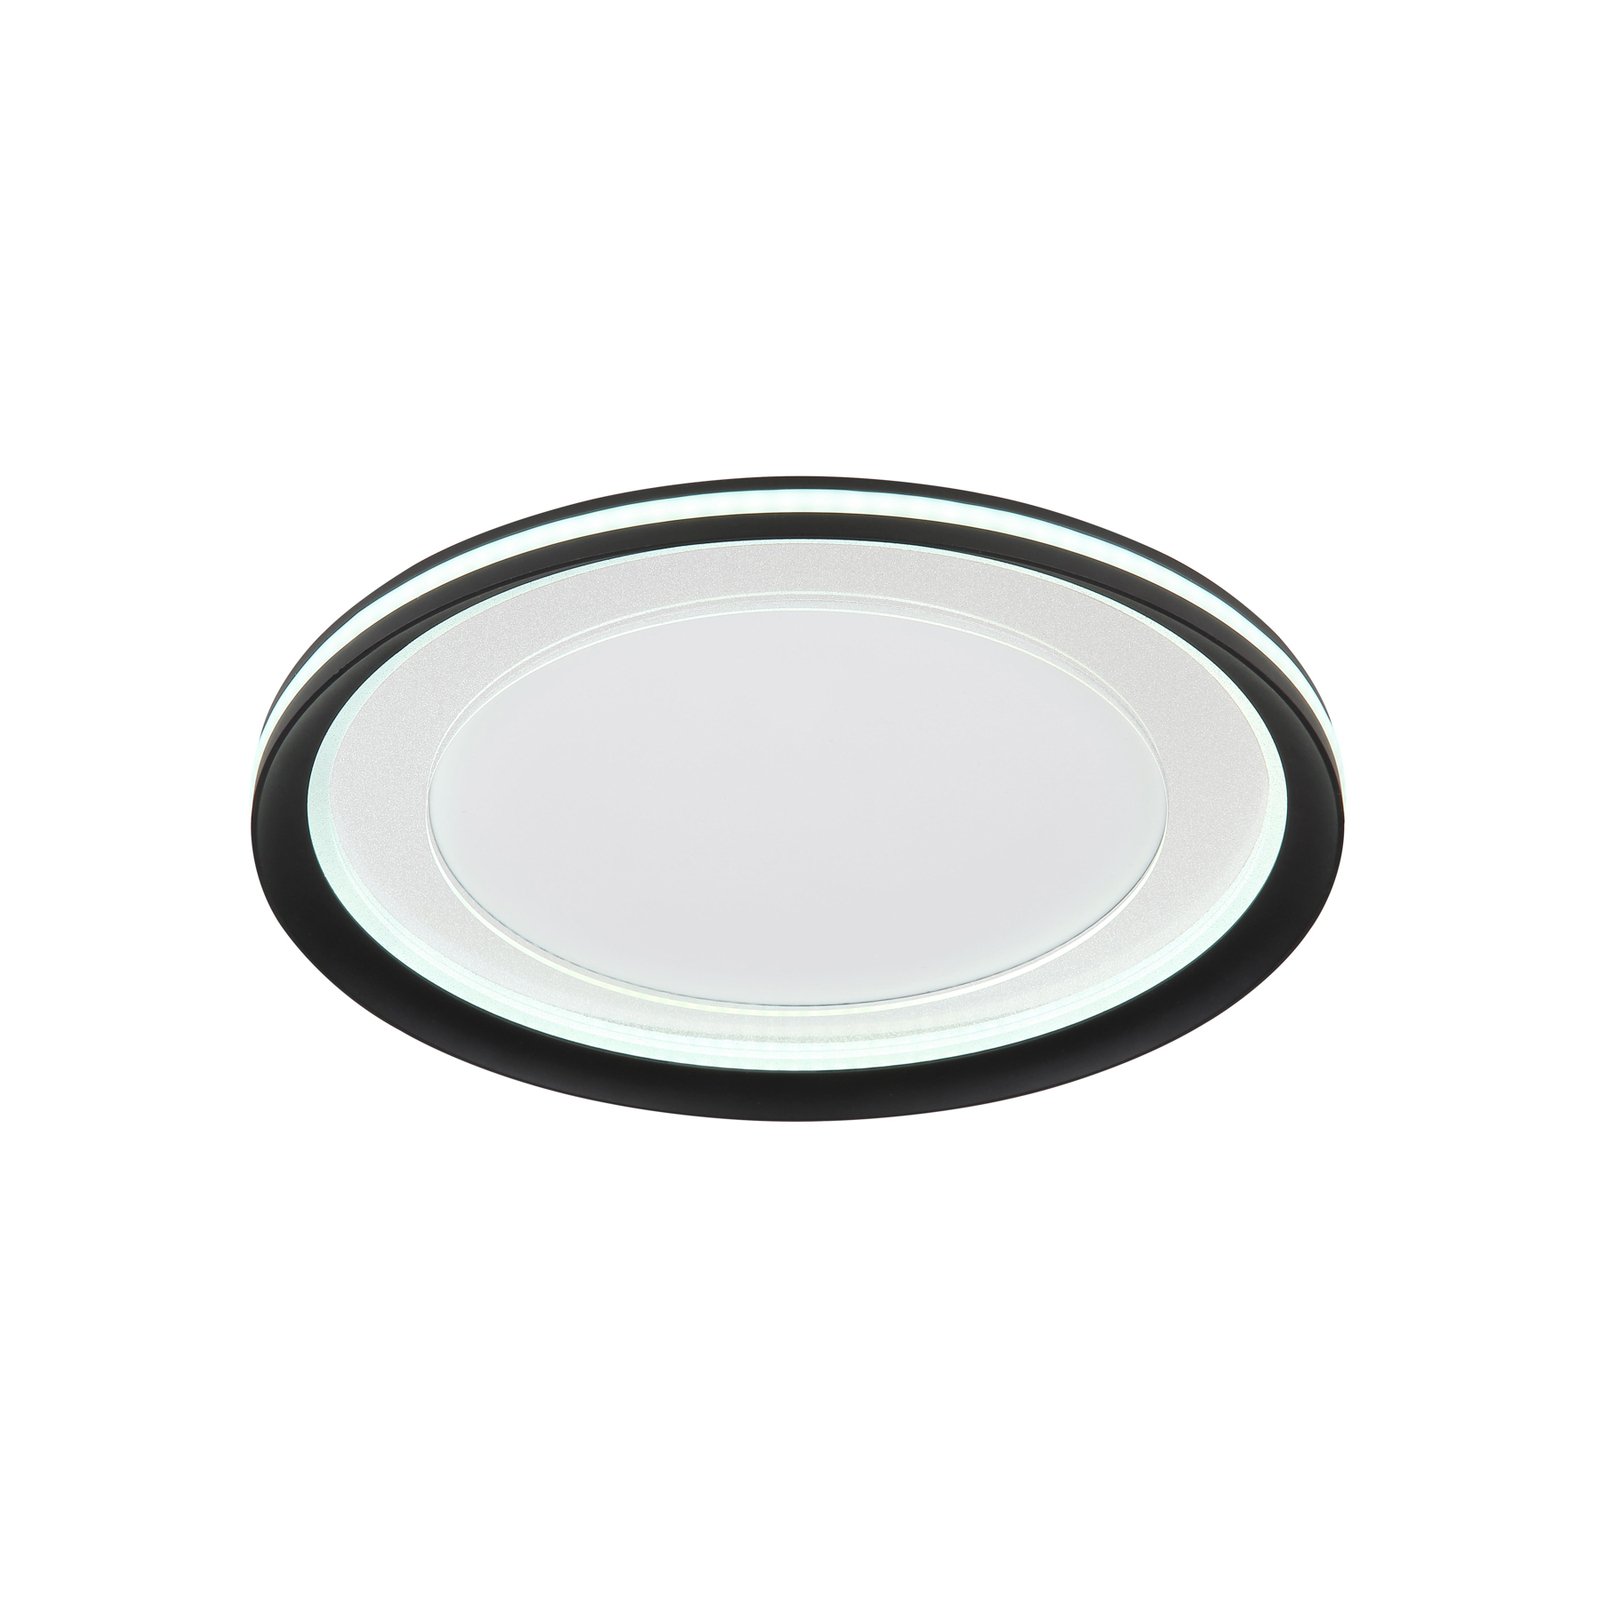 Clarino LED-kattovalaisin, Ø 41,5 cm, musta, akryyli, CCT